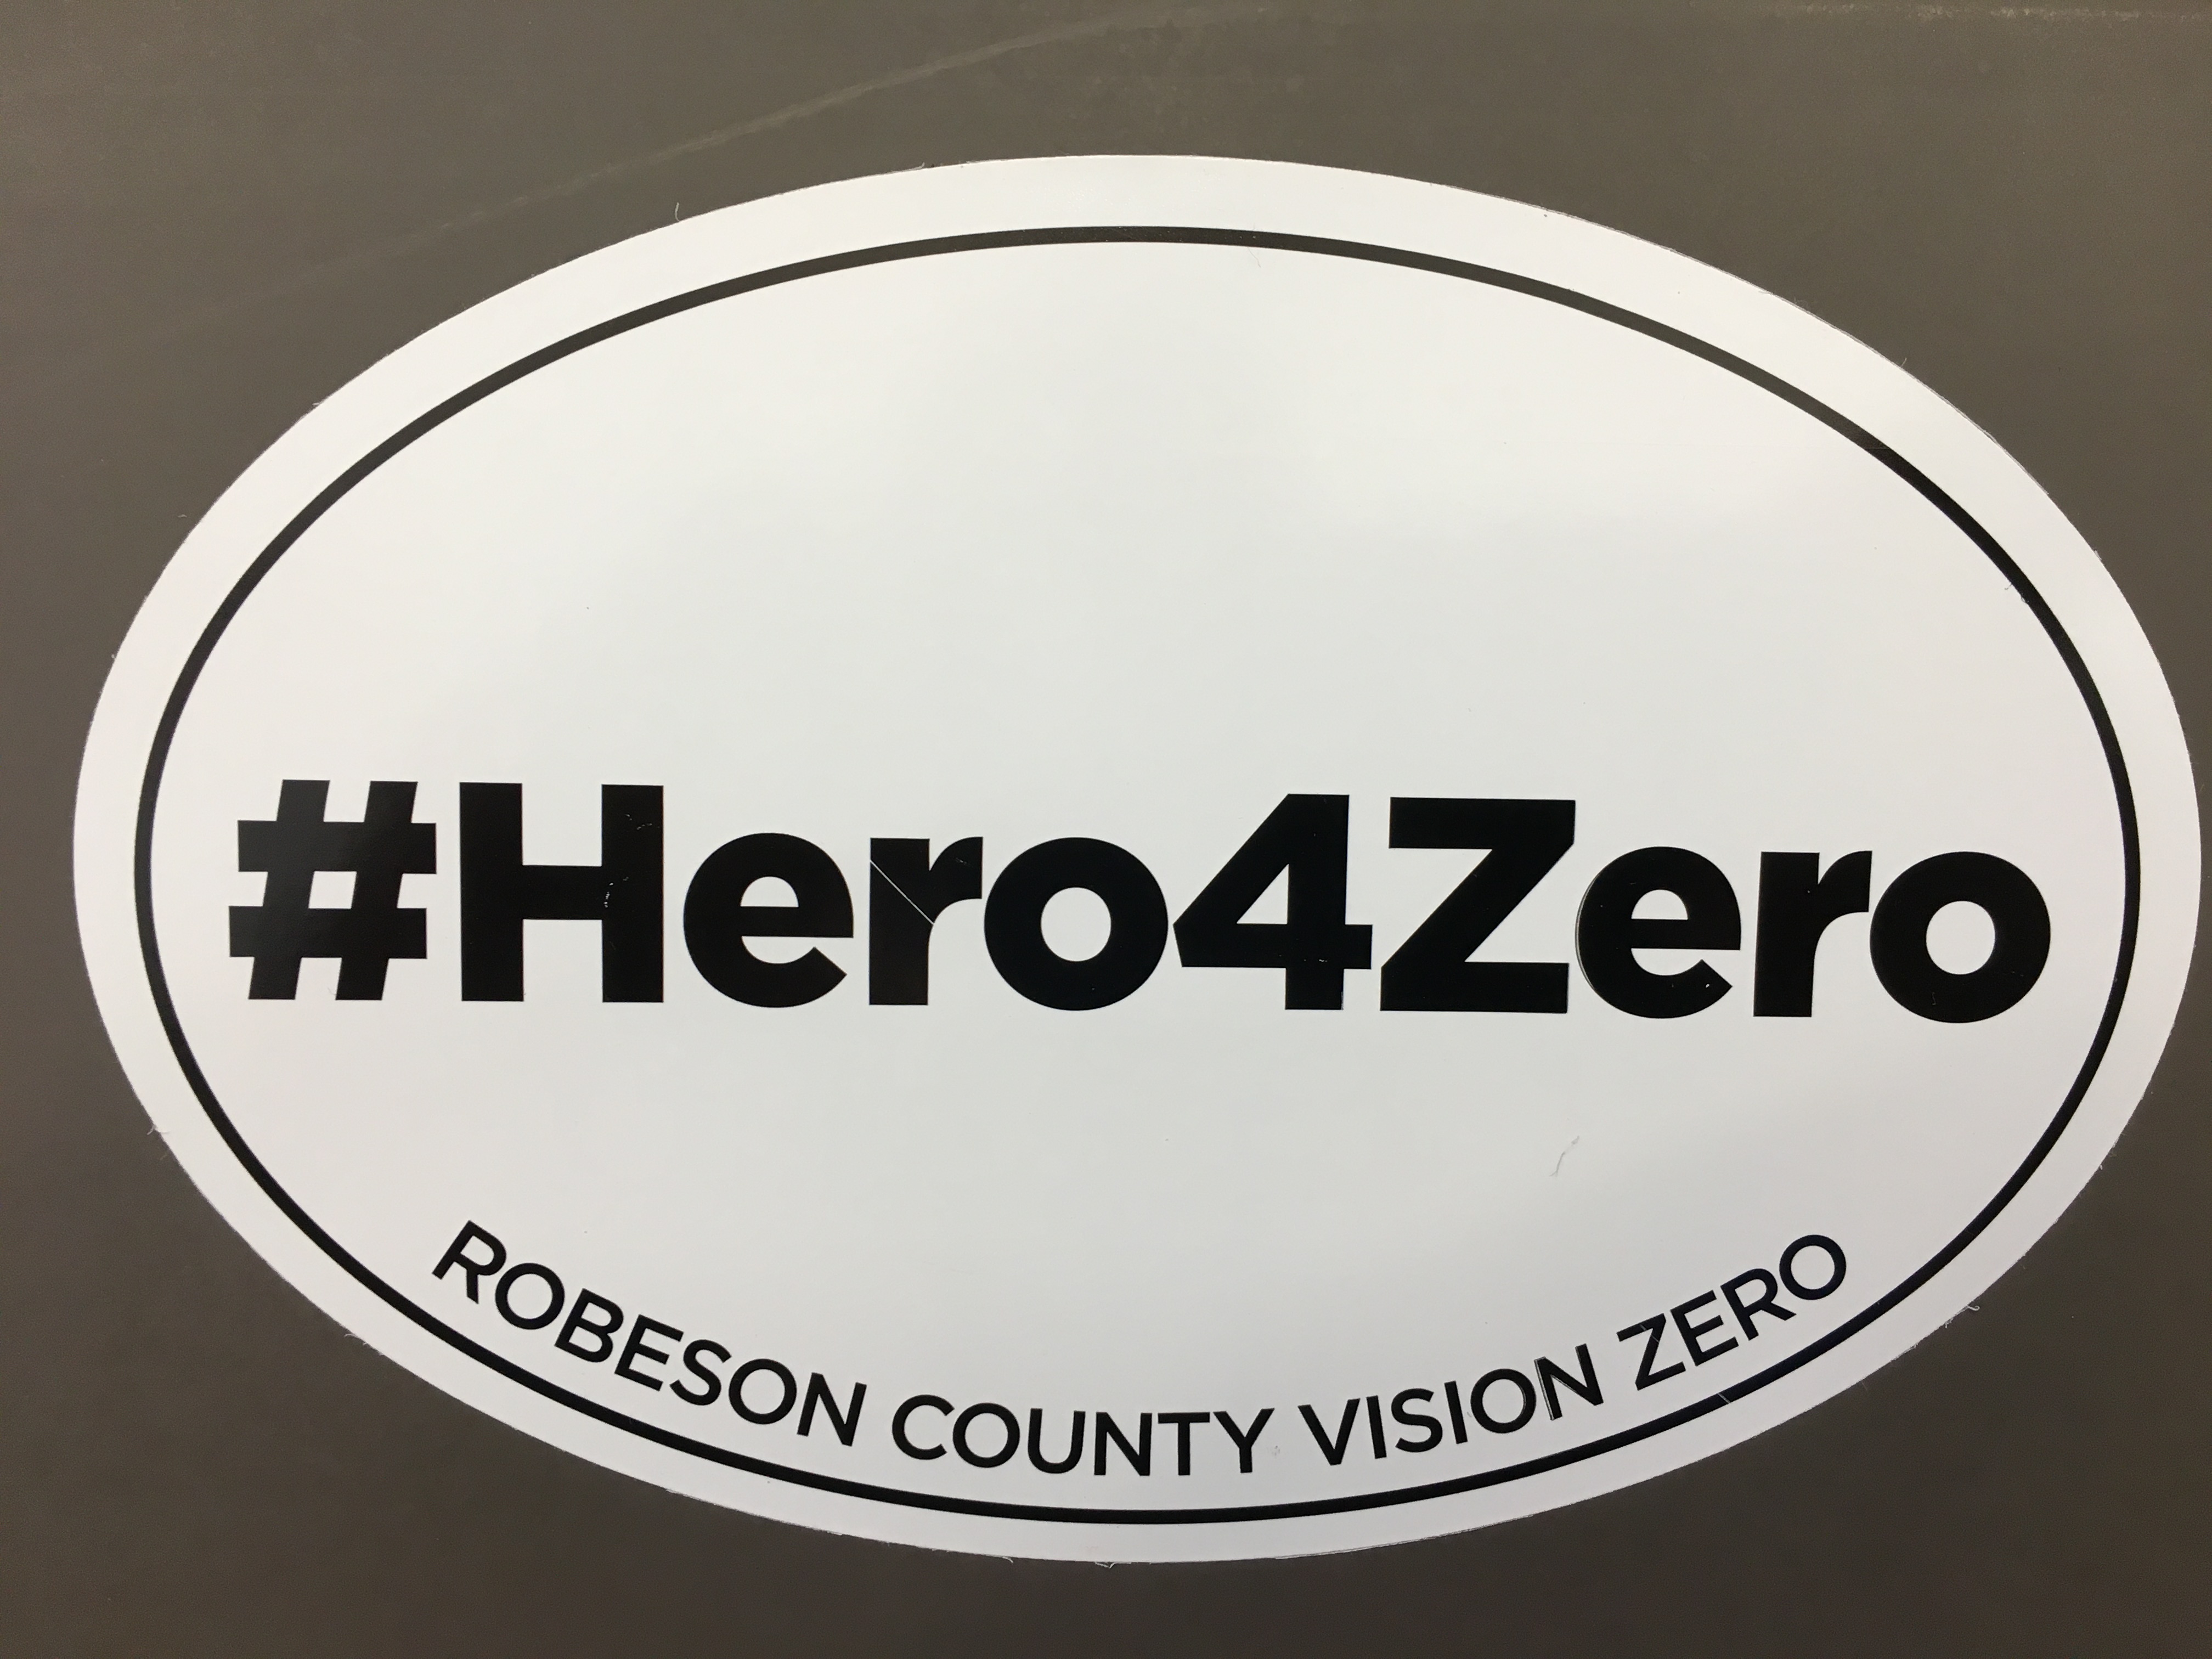 Hero 4 zero image